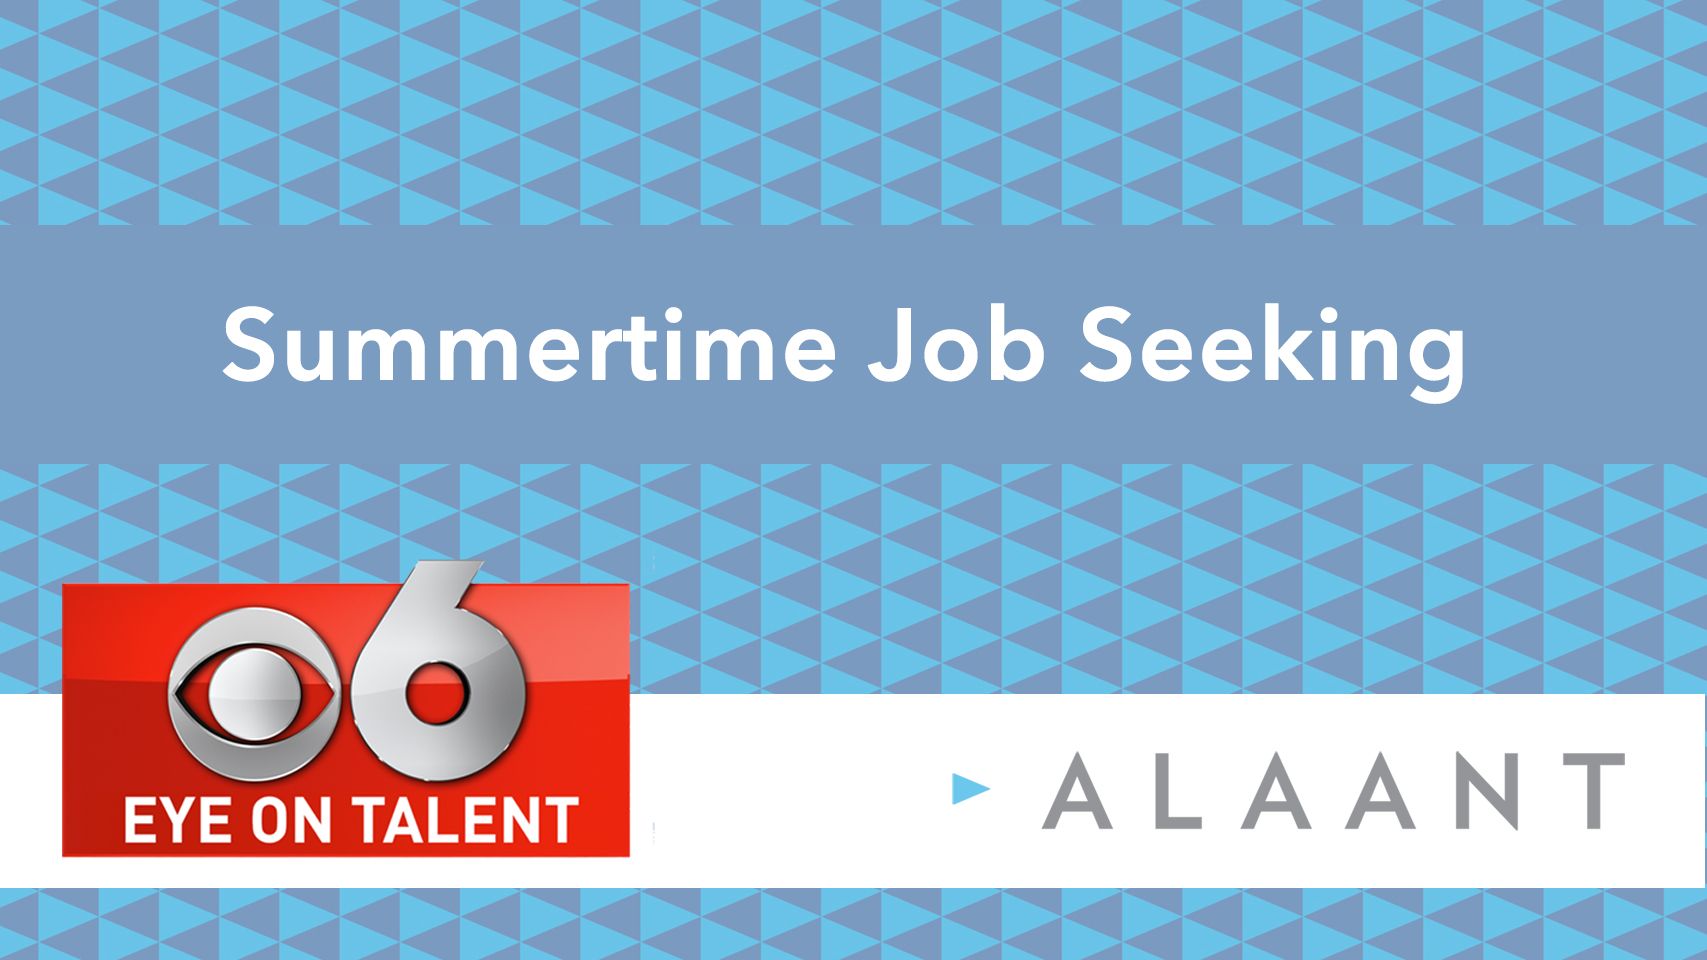 Alaant Eye on Talent Summertime Job Seeking  